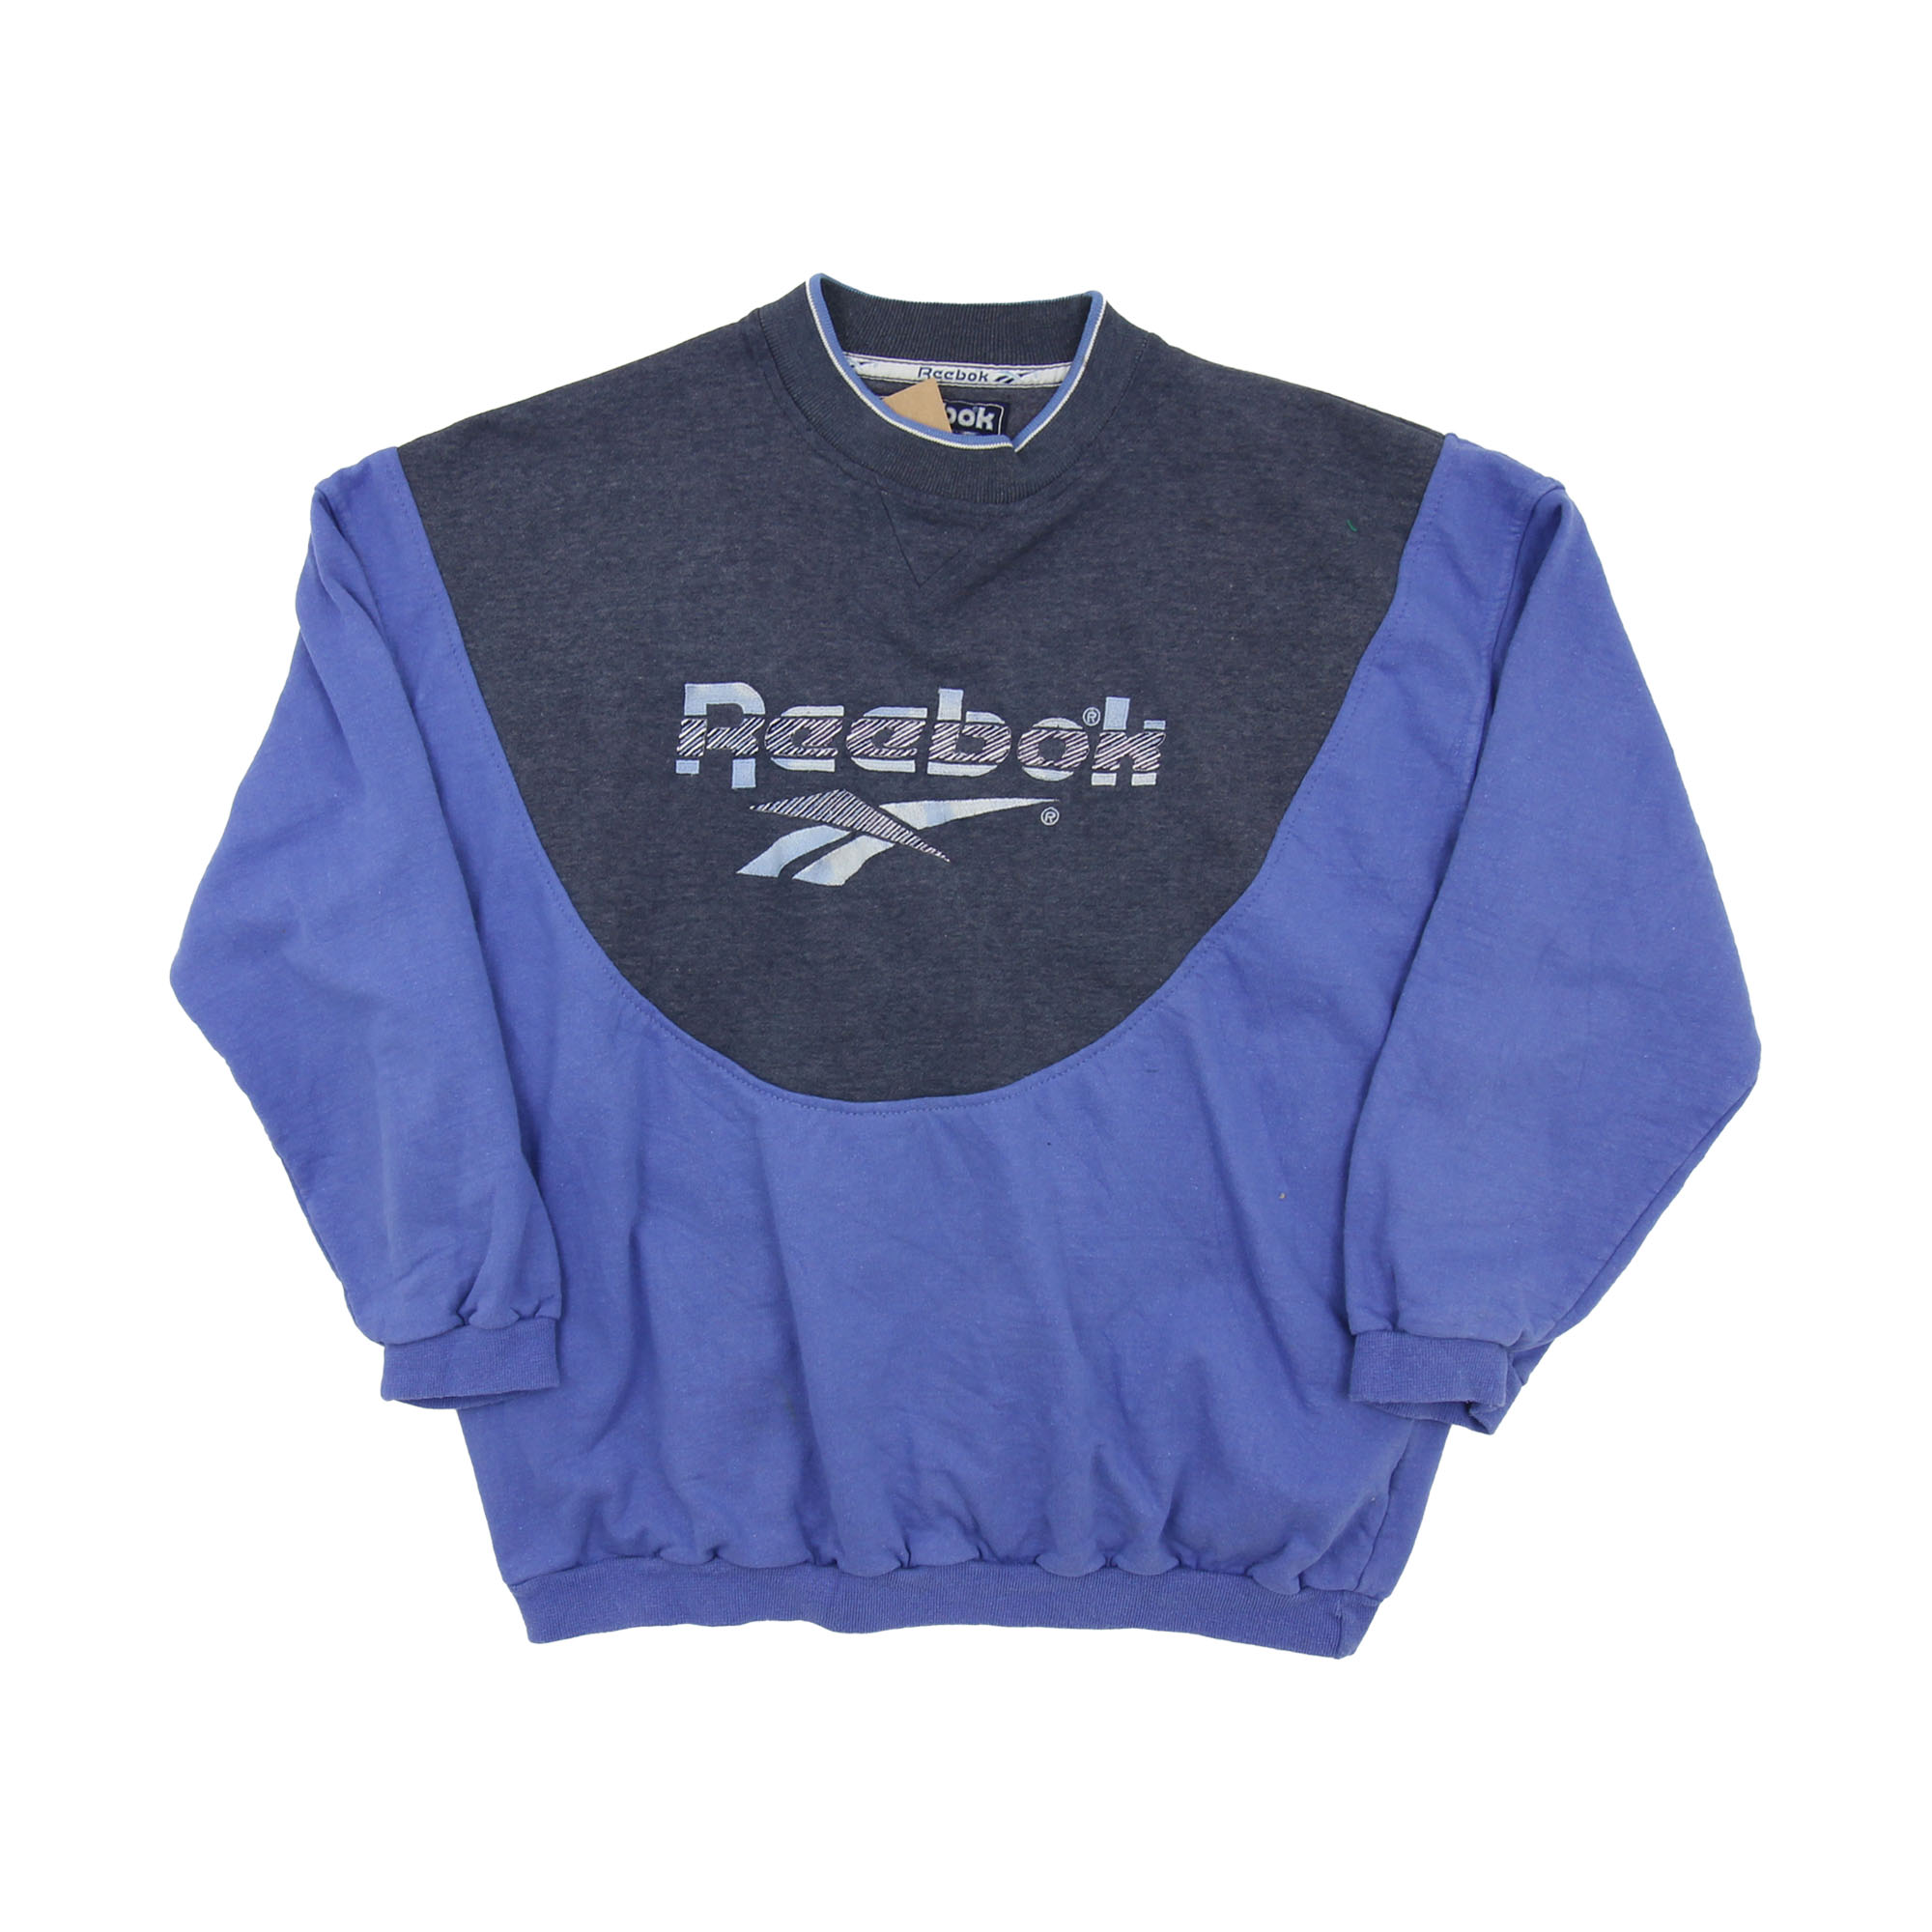 Reebok Rework Sweatshirt -  S/M